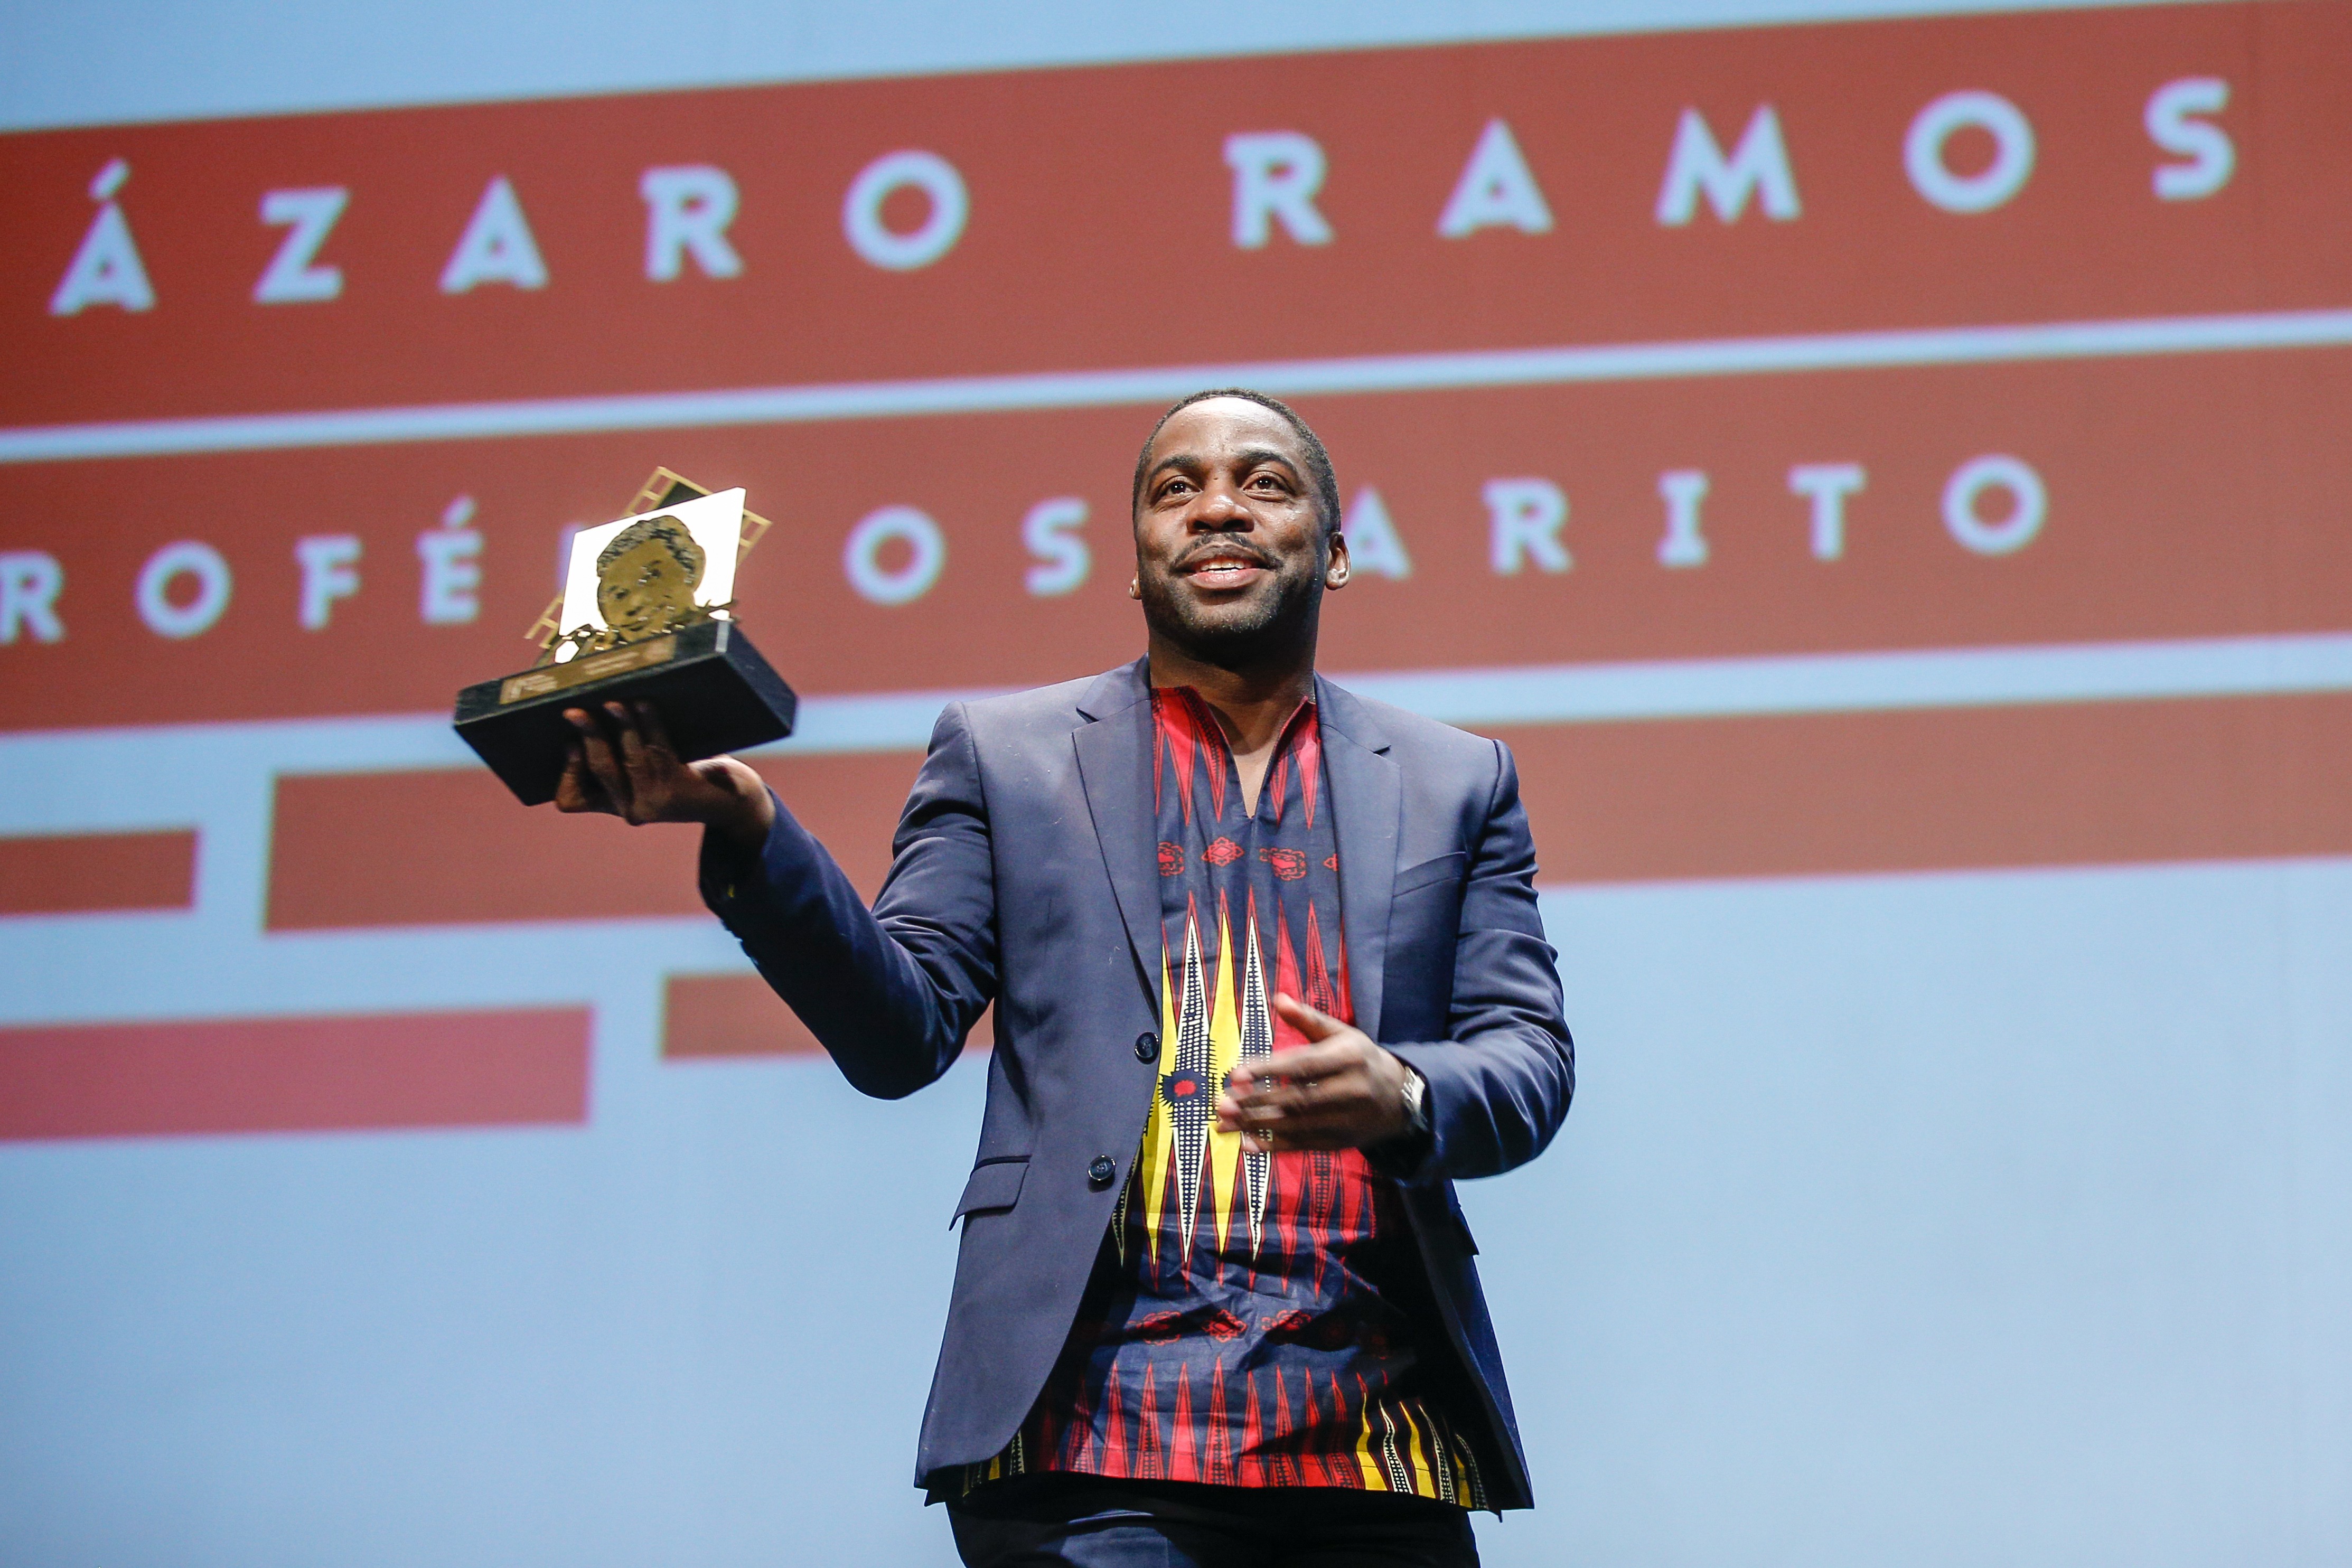 Lázaro Ramos recebe Troféu Oscarito (Foto: Edison Vara / Agência Pressphoto)